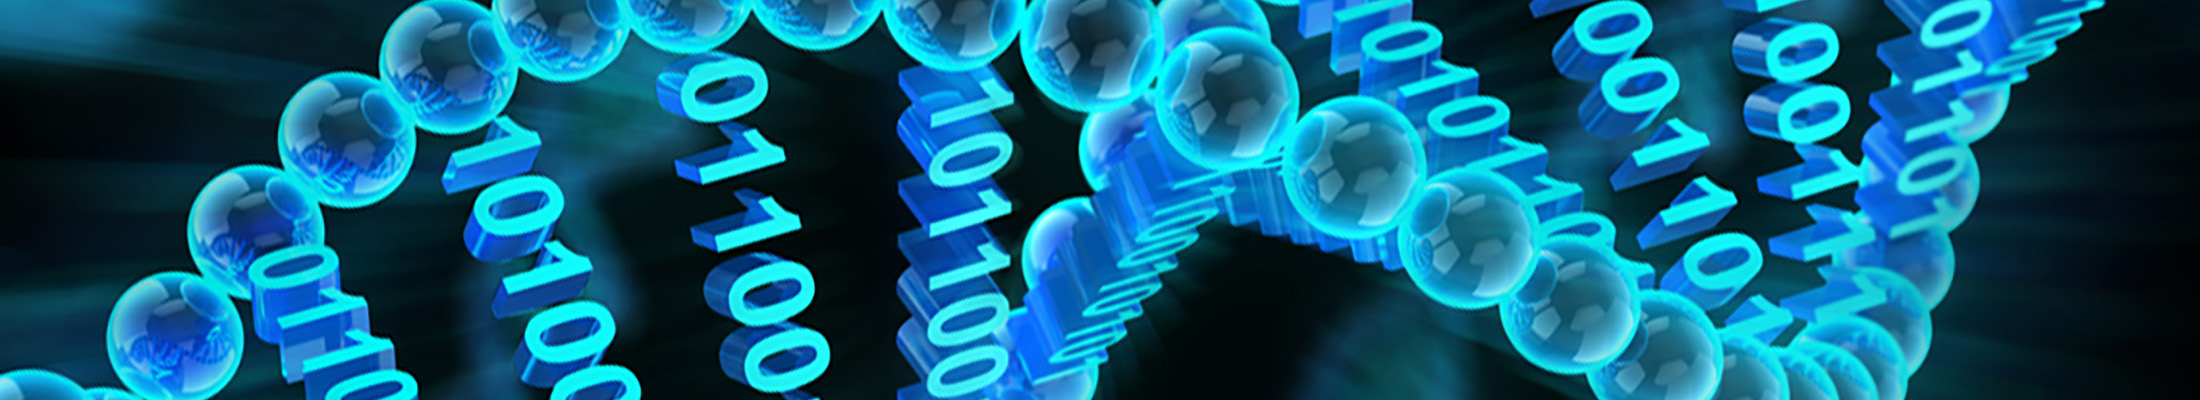 Bioinformatics banner image